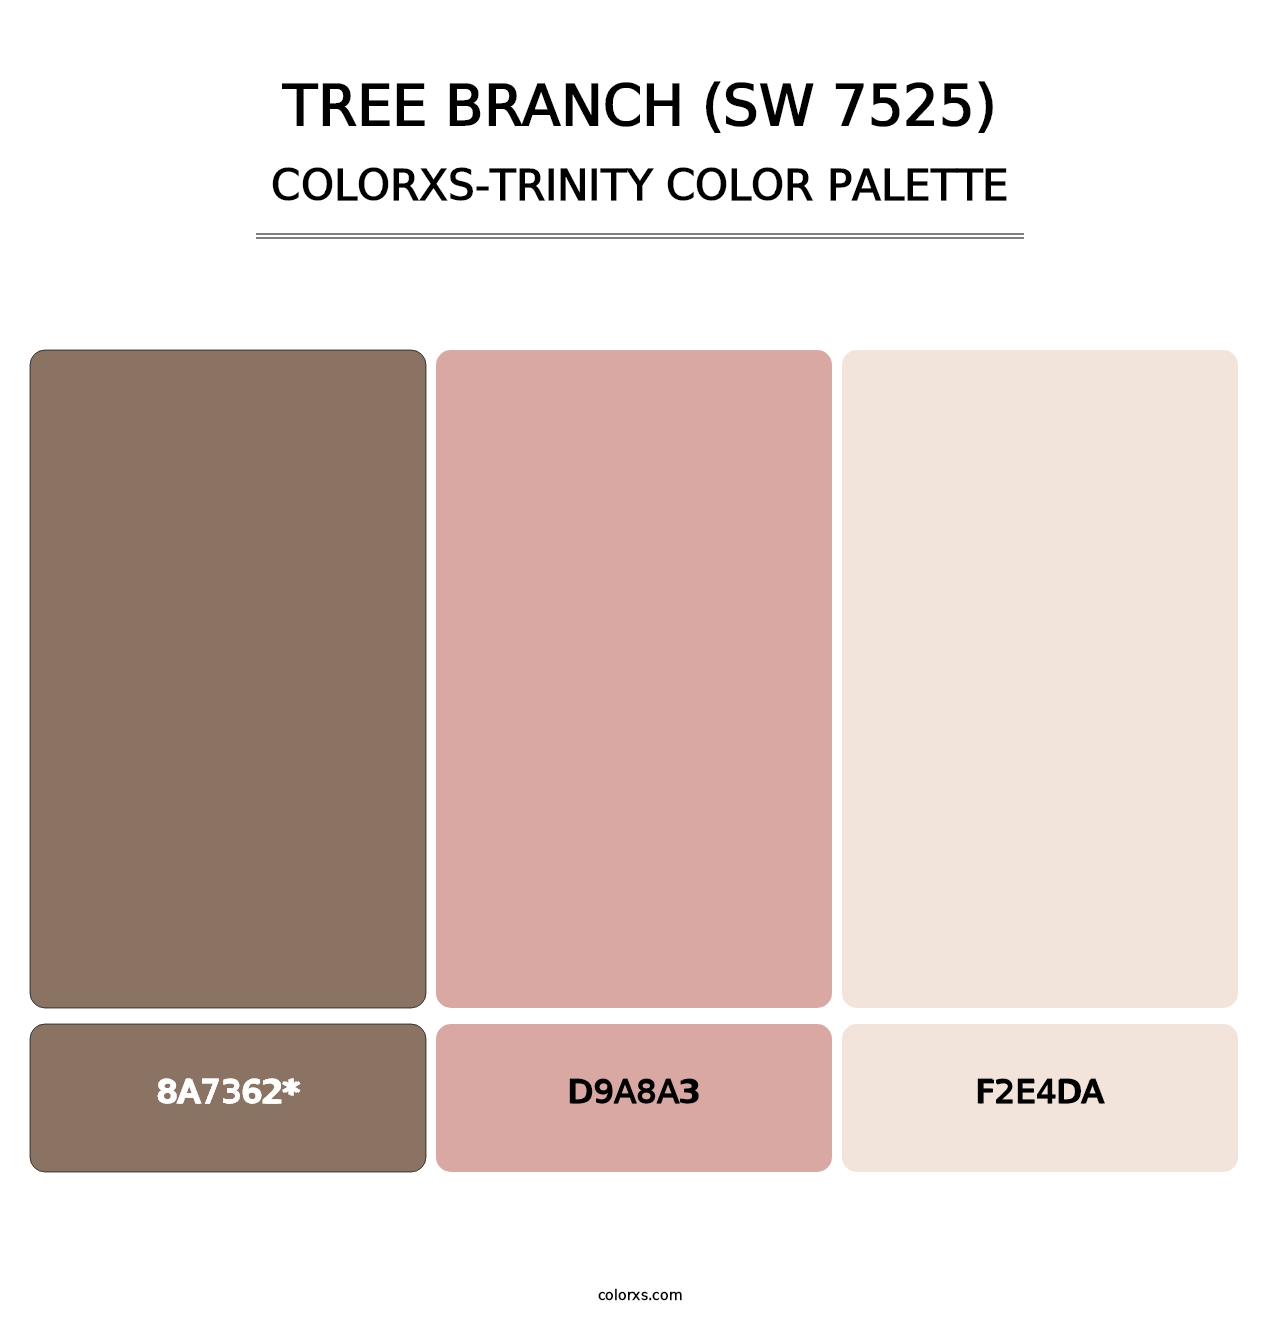 Tree Branch (SW 7525) - Colorxs Trinity Palette